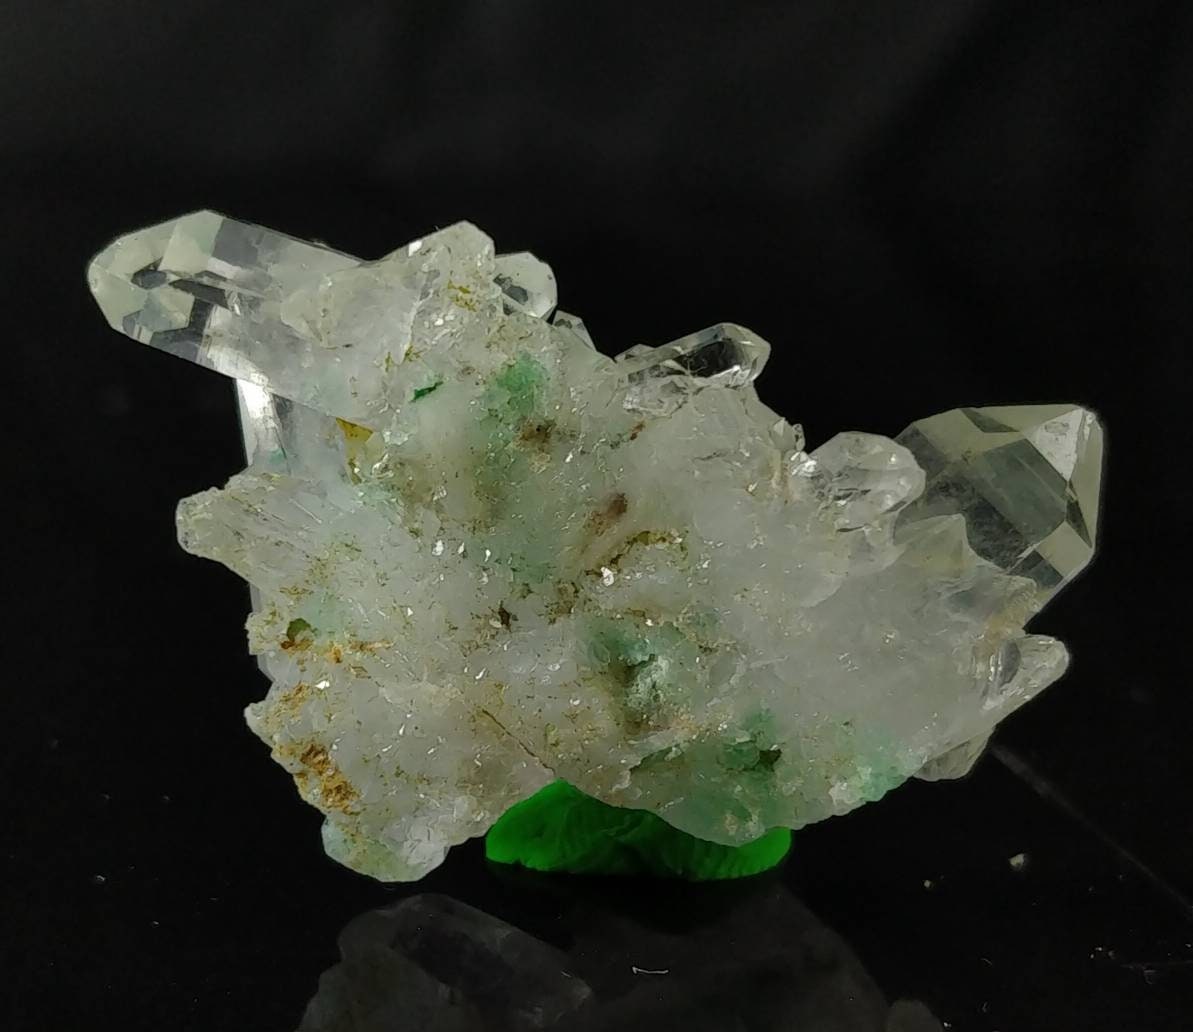 ARSAA GEMS AND MINERALSGreen fuchite inclusion quartz cluster from Balochistan Pakistan - Premium  from ARSAA GEMS AND MINERALS - Just $25.00! Shop now at ARSAA GEMS AND MINERALS